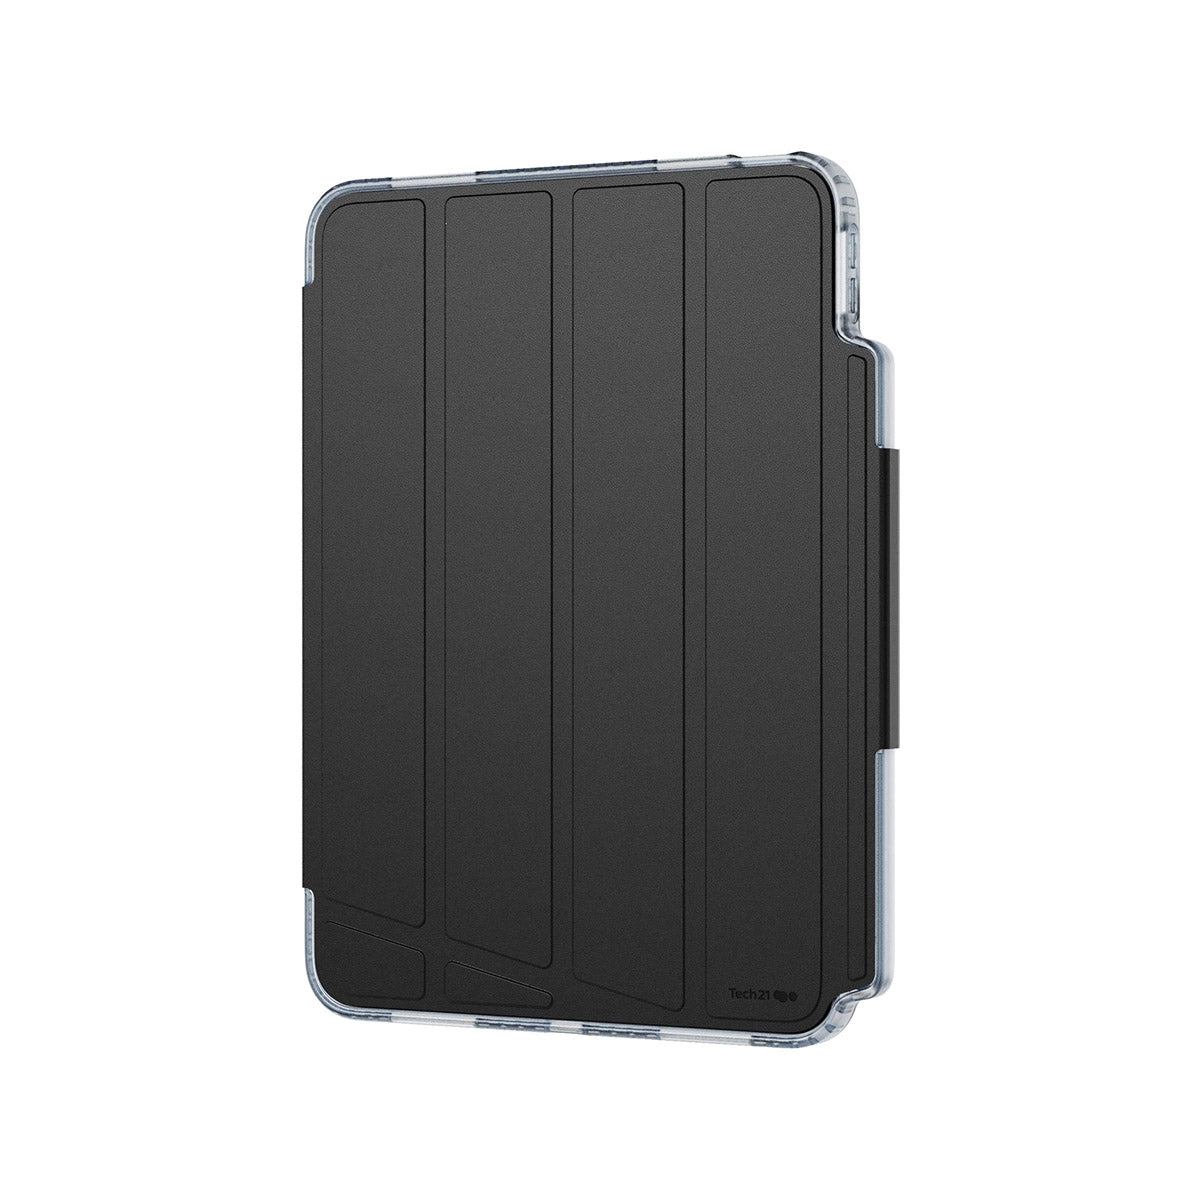 Tech21 EvoFolio Tablet Case for iPad 10th Gen